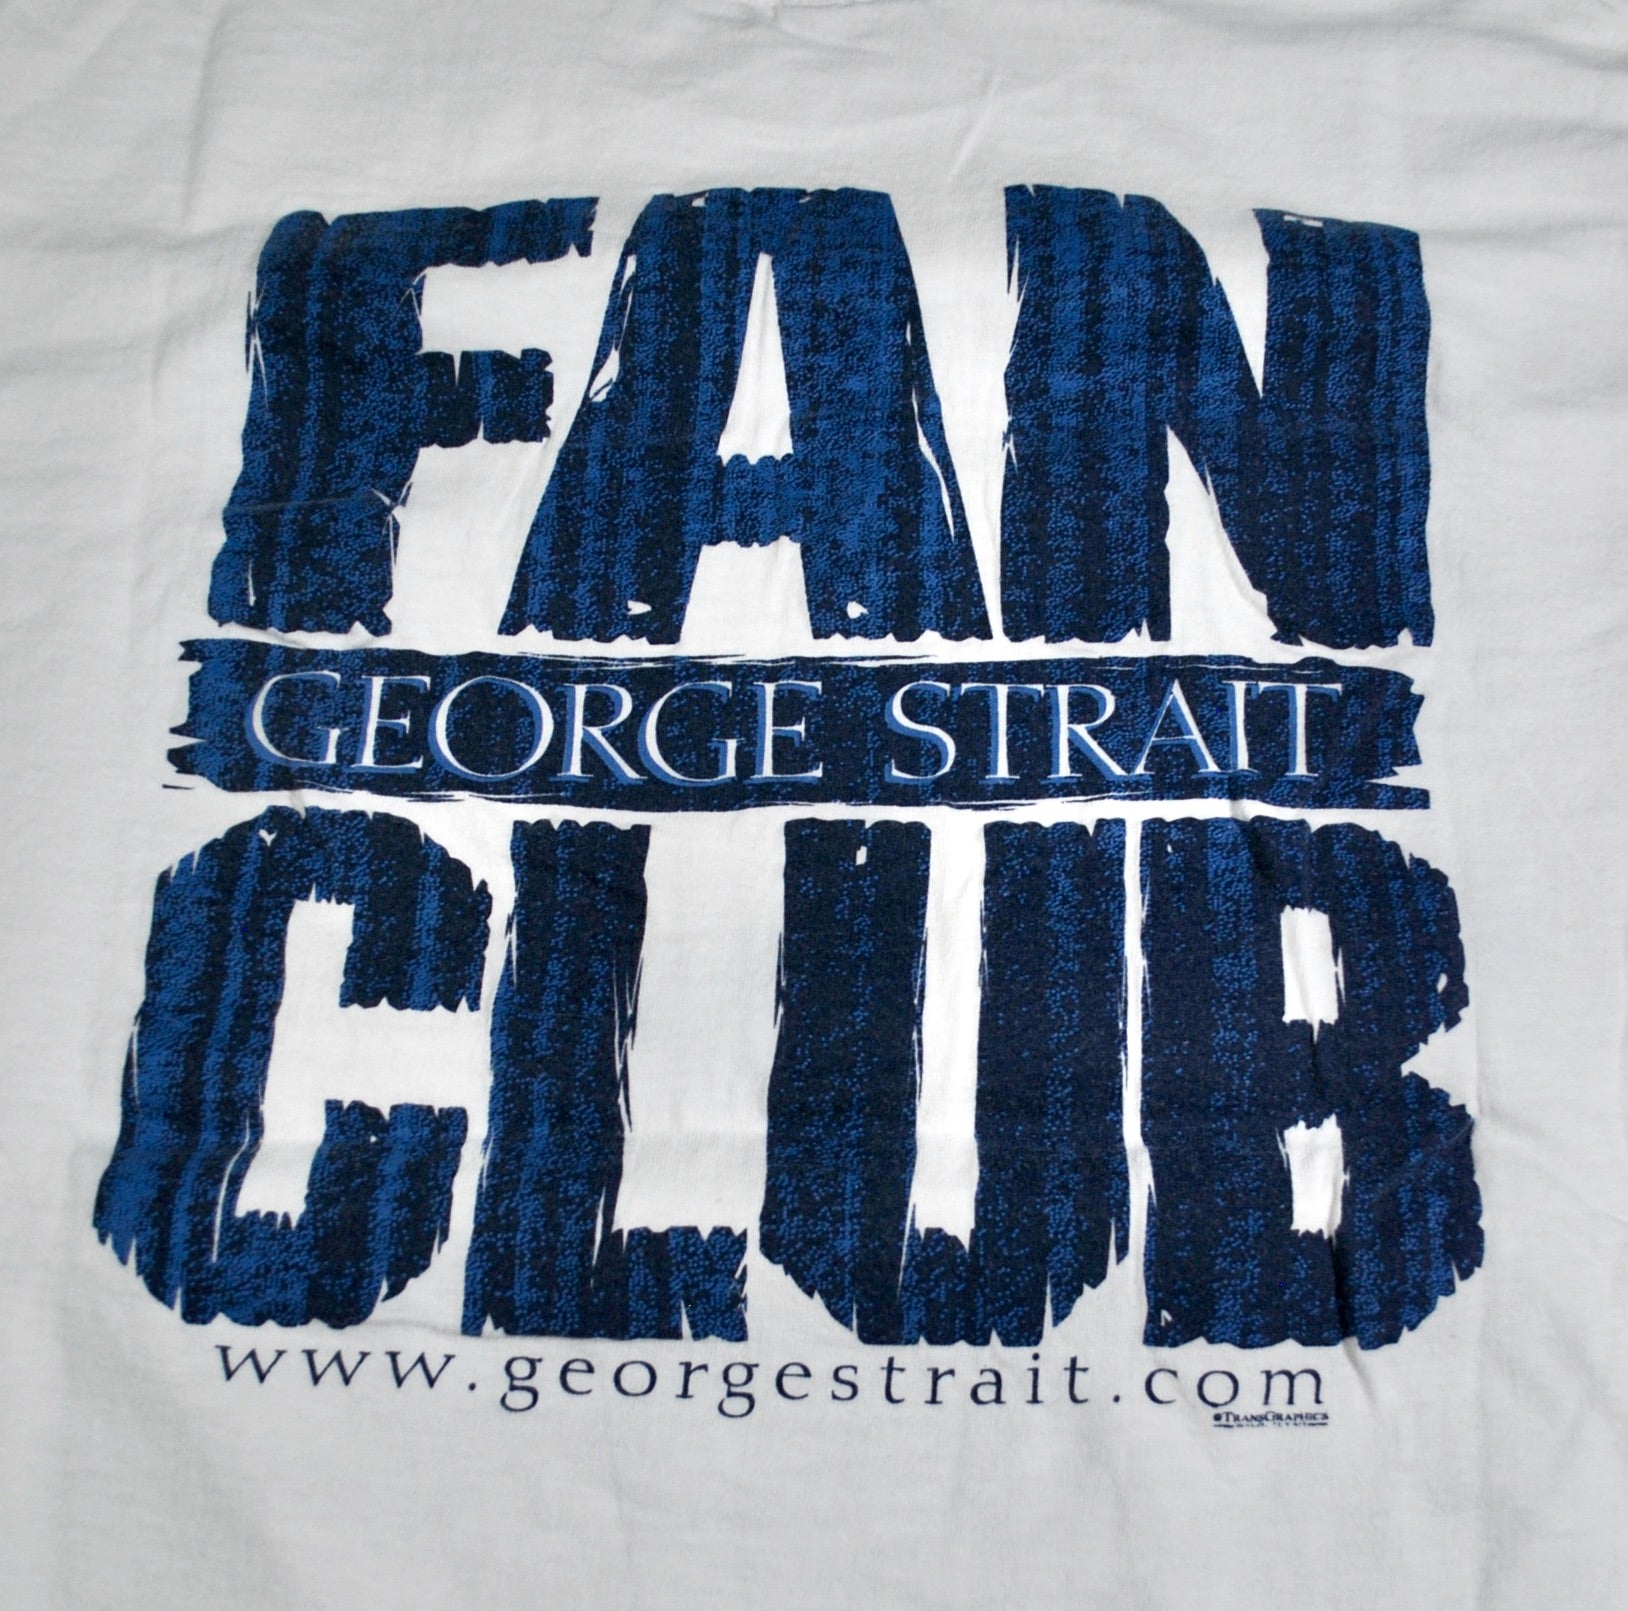 Fan Club Registration - George Strait